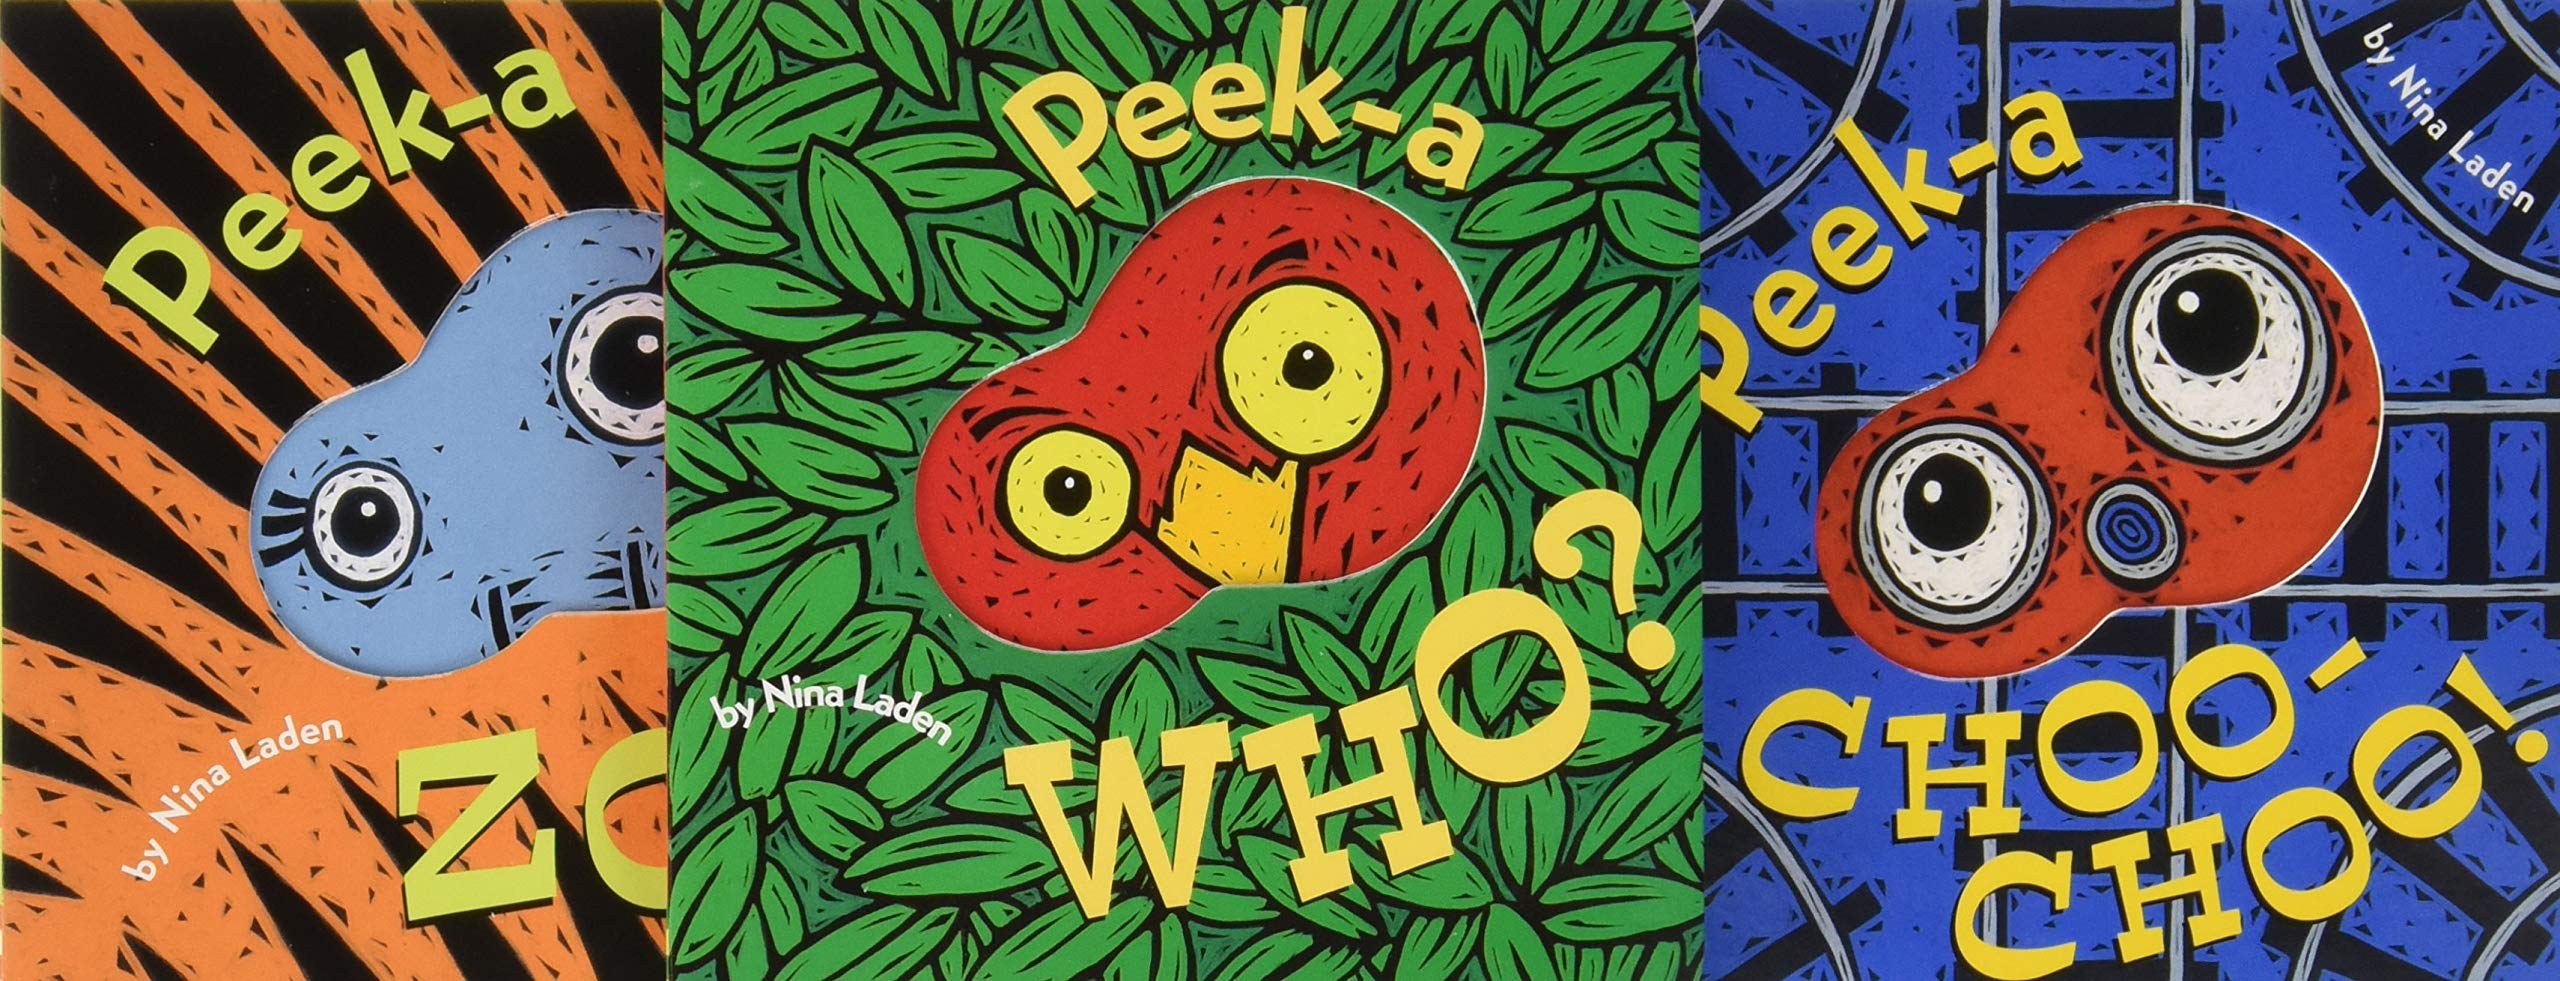 Peek-a Who? Boxed Set: (Children's Animal Books, Board Books for Kids)